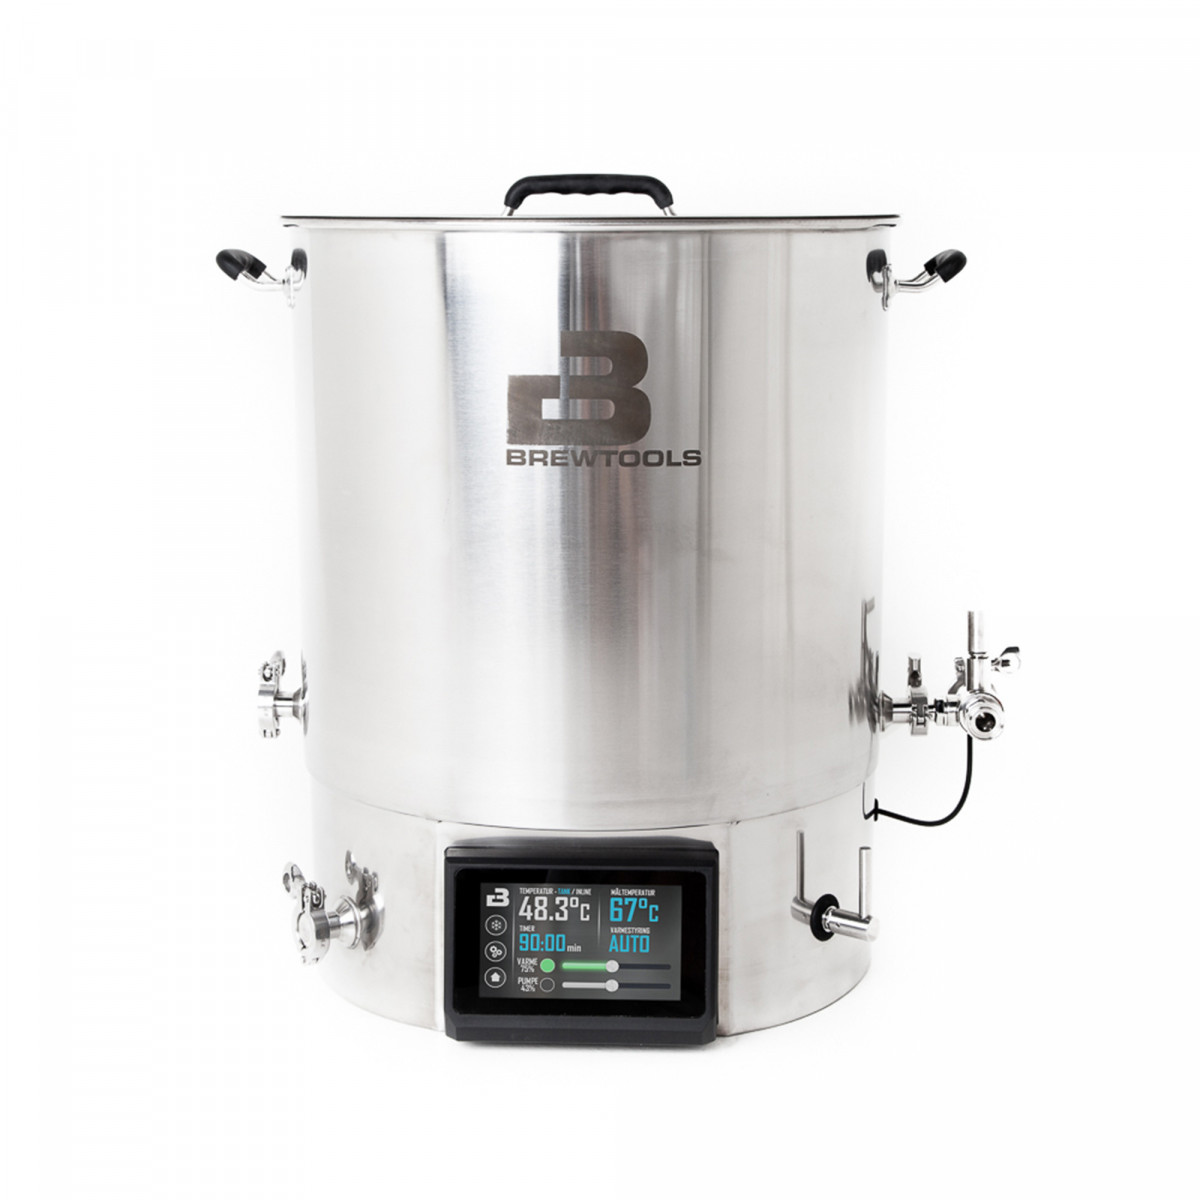 Brewtools brewing system B80pro 